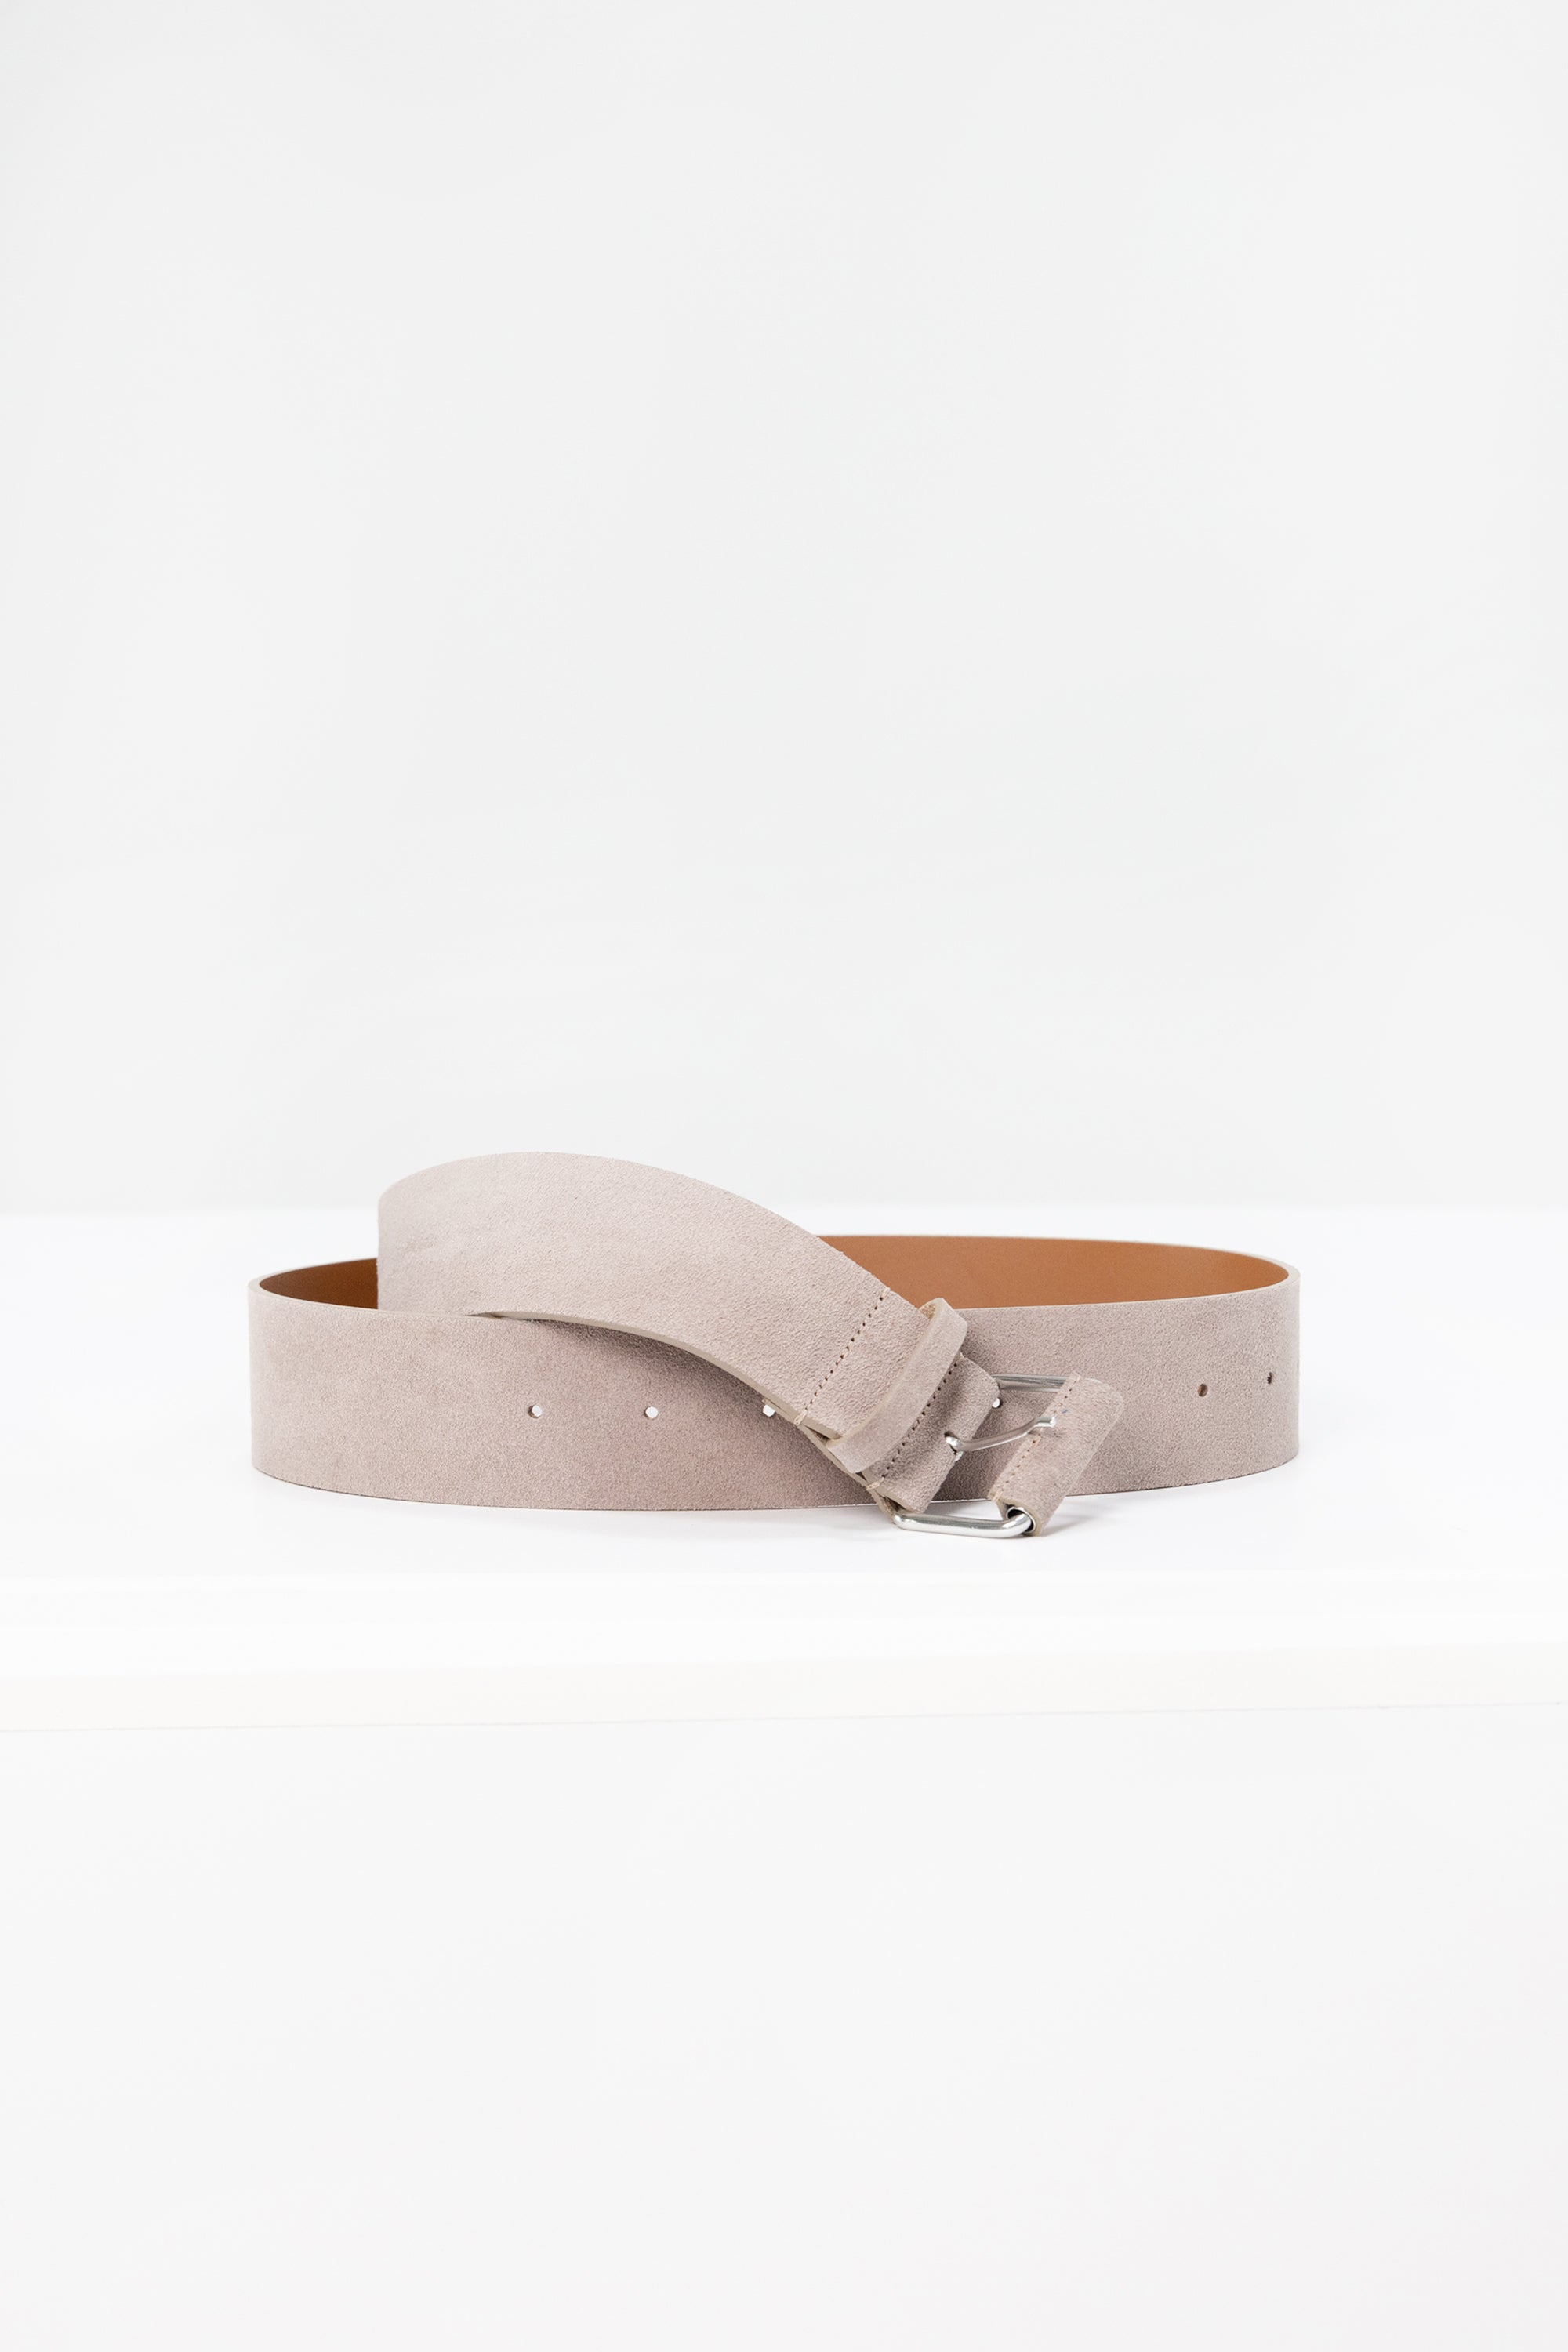 SOFIE D'HOORE - Suede Leather Belt, Mink